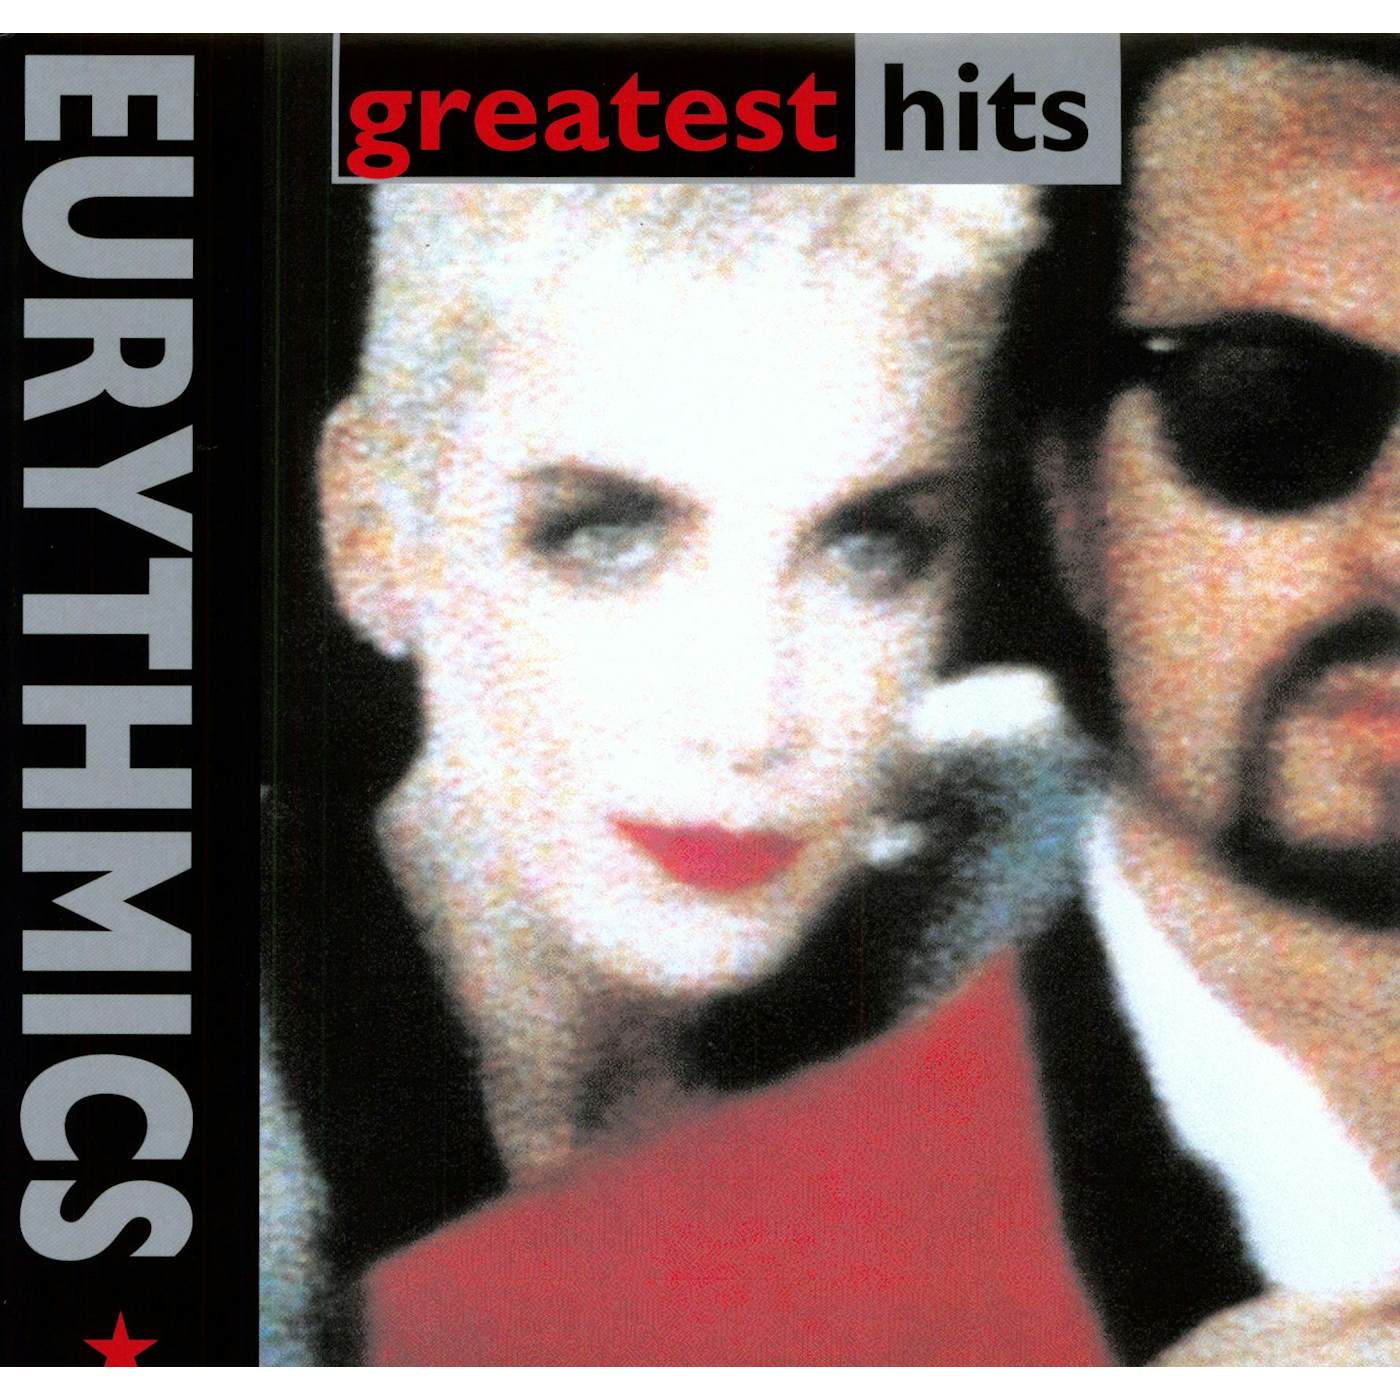 Eurythmics GREATEST HITS Vinyl Record - 180 Gram Pressing